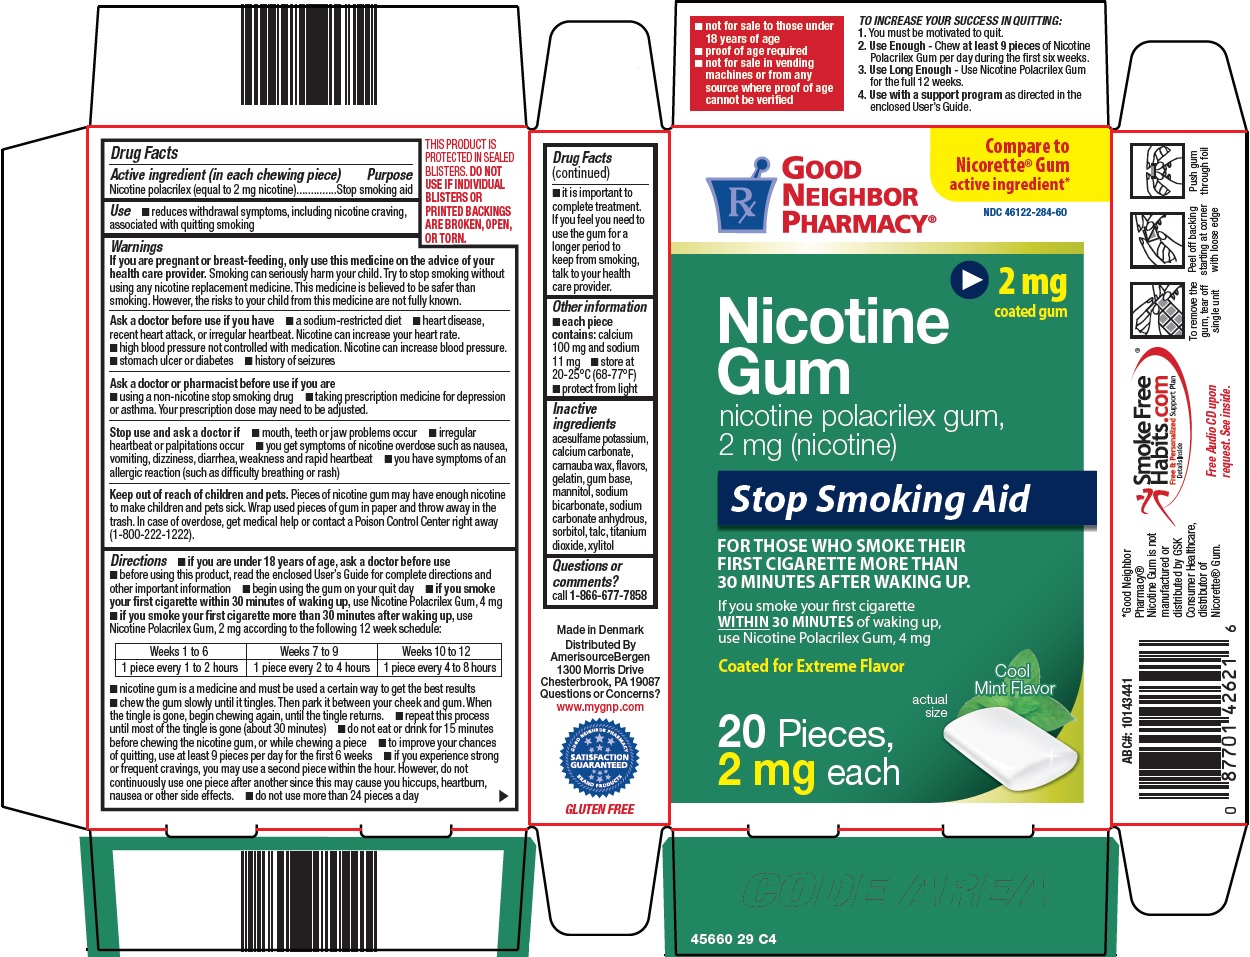 456-29-nicotine-gum.jpg